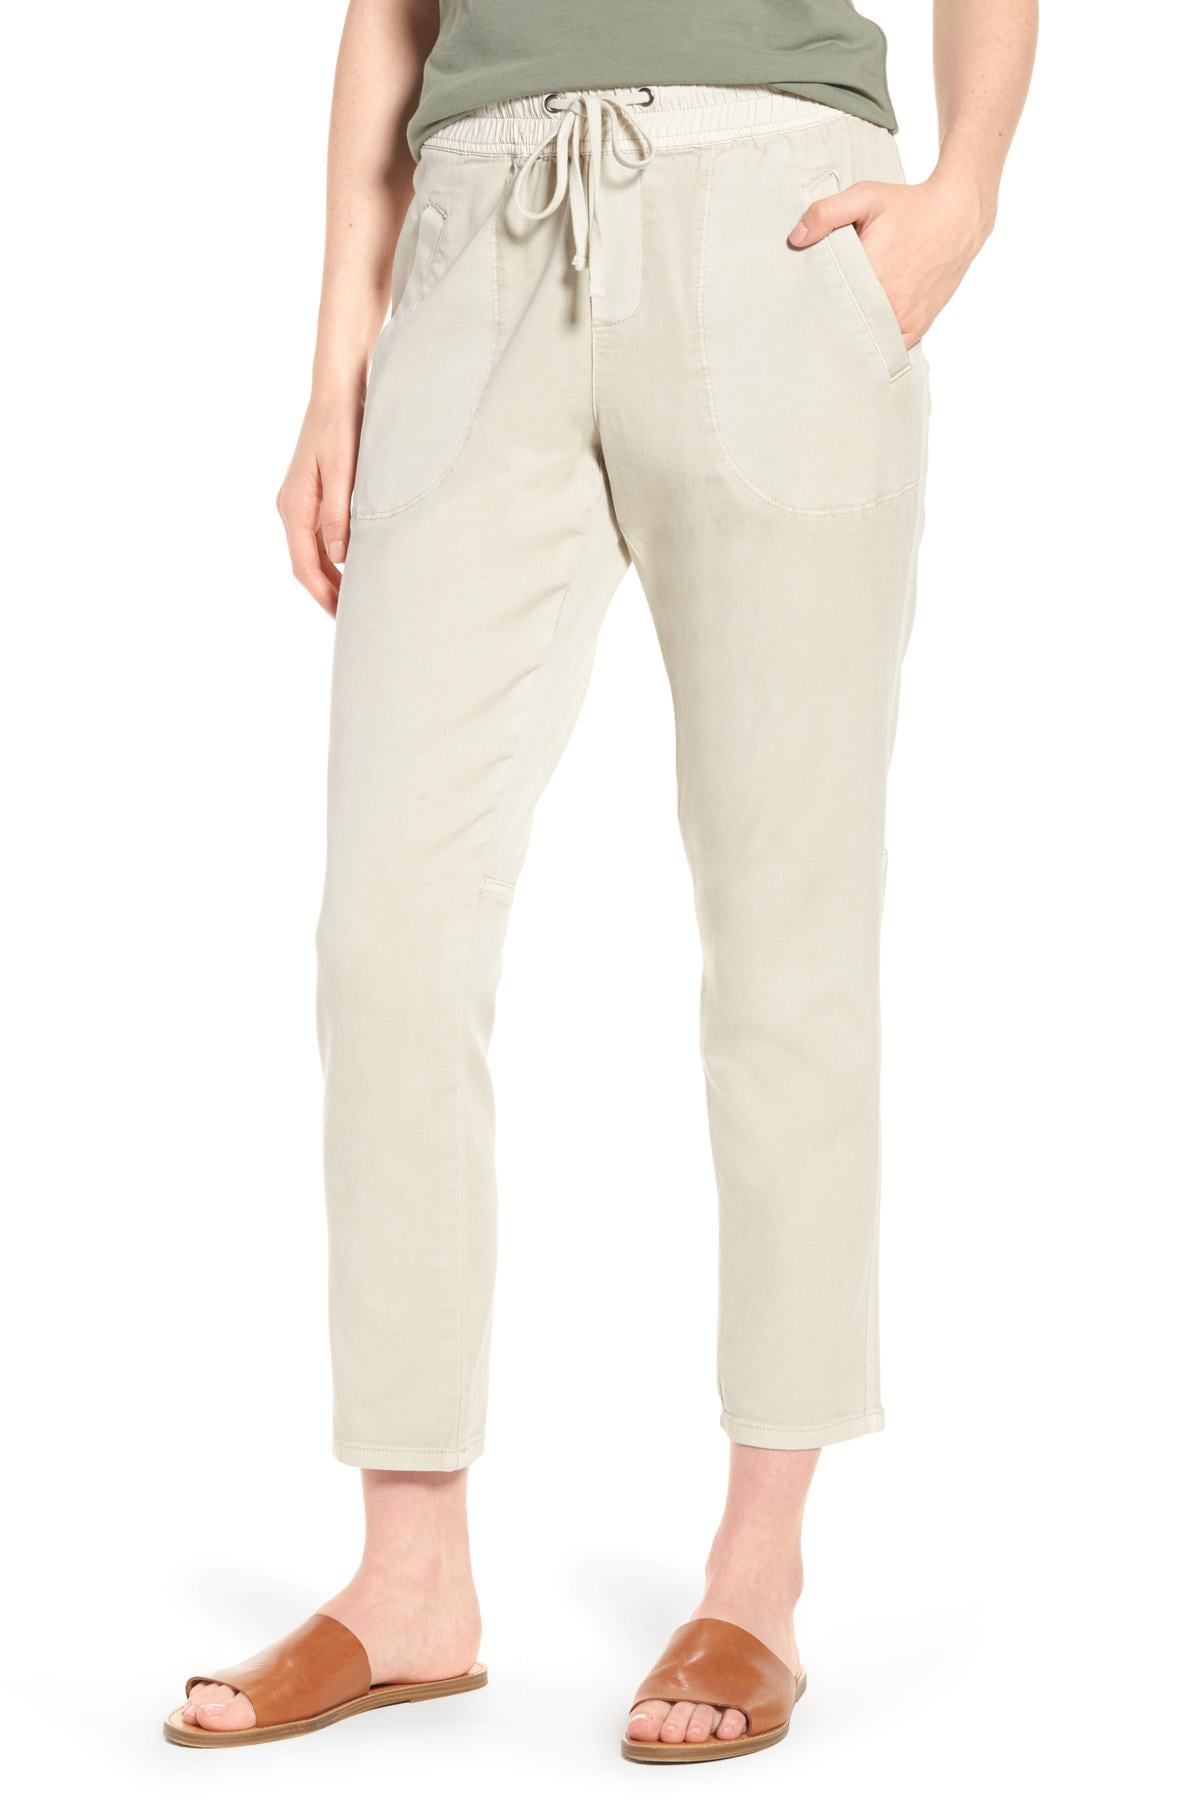 NIC+ZOE - Women's Petite Pull-On Utility Pants 14P - Walmart.com ...